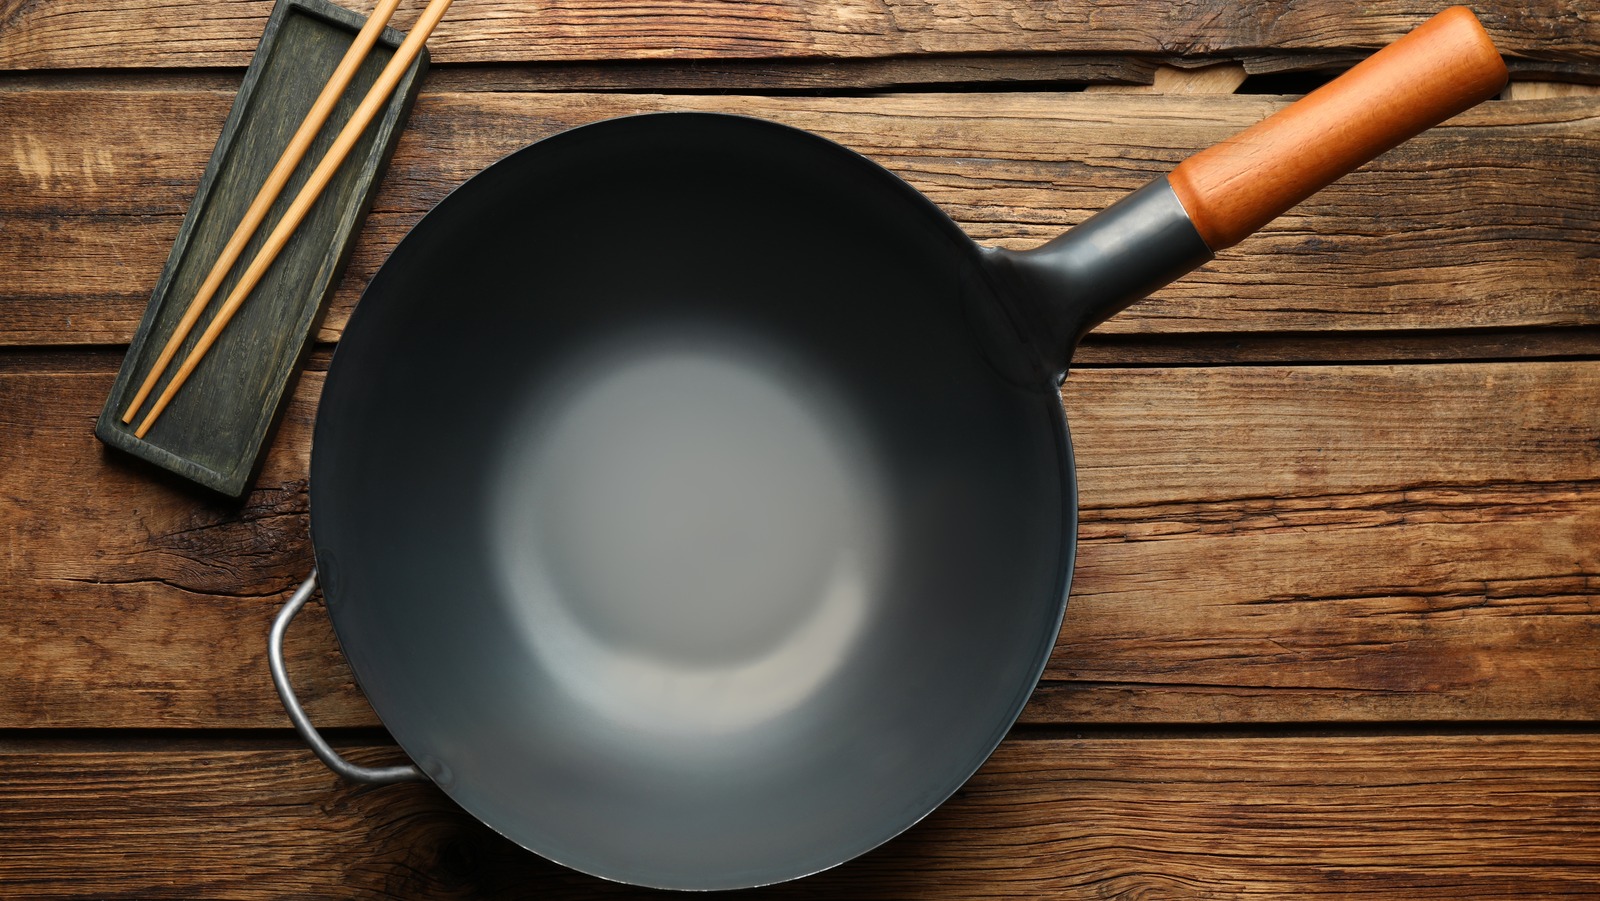 Babish Carbon Steel Flat Bottom Wok and Stir Fry Pan, 14-inch